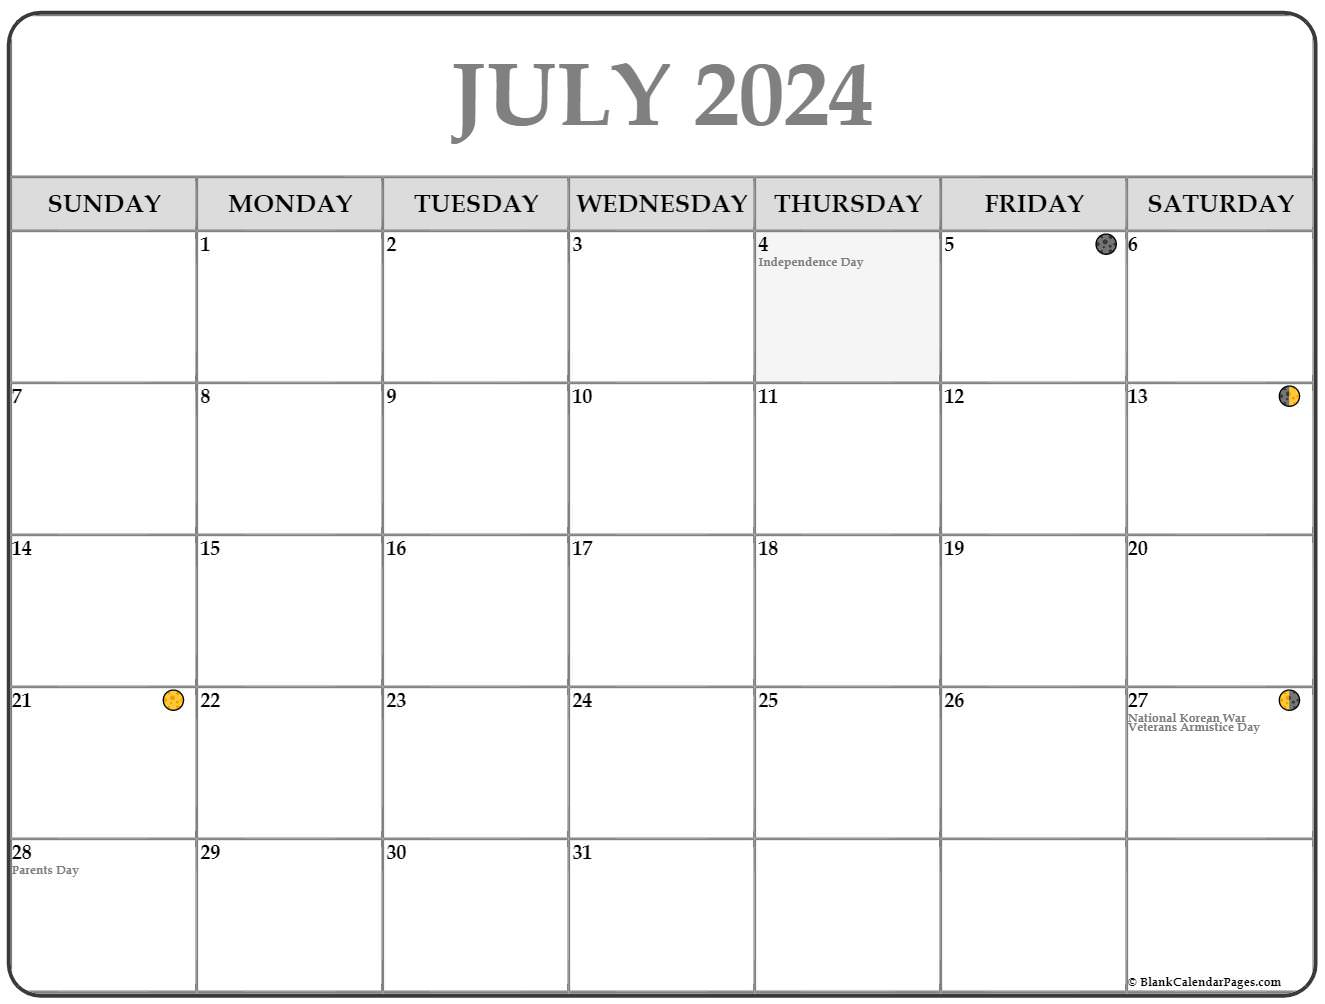 July 2024 Lunar Calendar | Moon Phase Calendar | July Moon Phase Calendar 2024